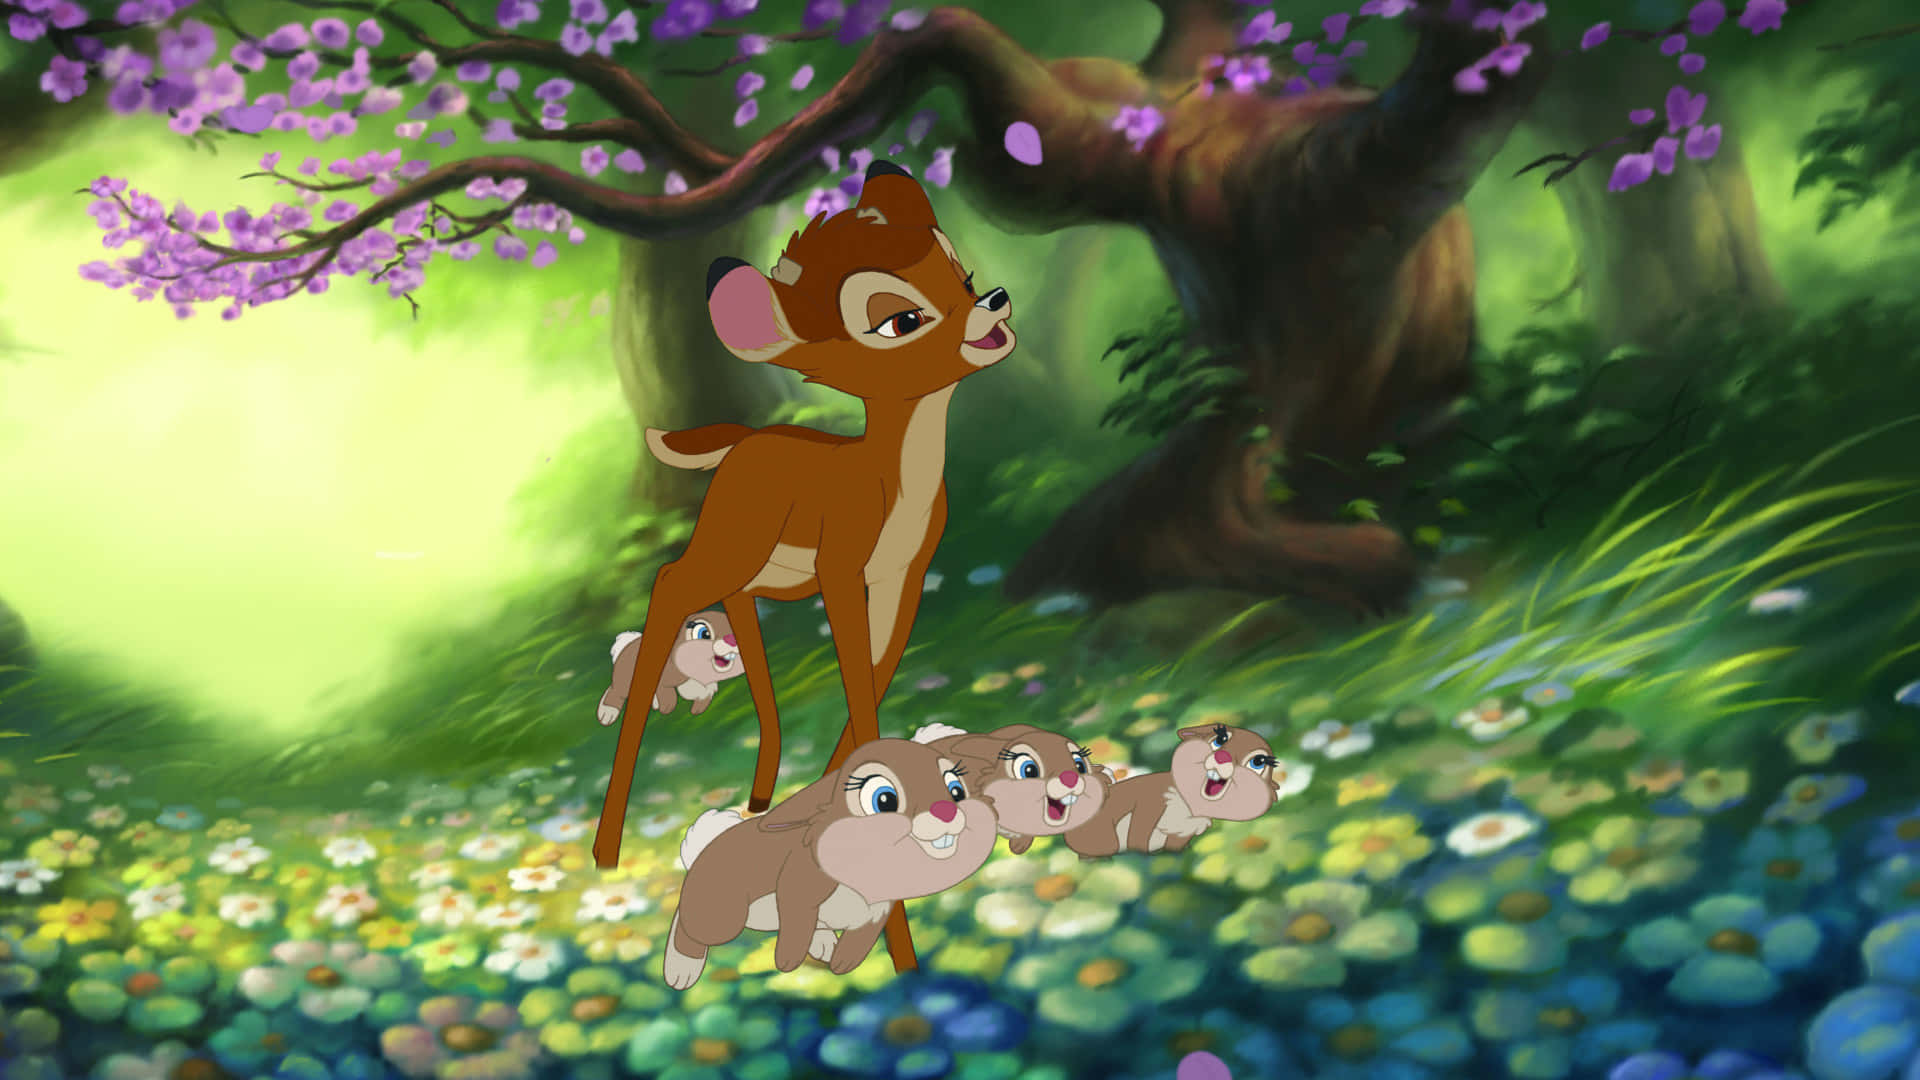 Waltdisneys Animierter Klassiker Bambi Bleibt Ein Zeitloser Klassiker.